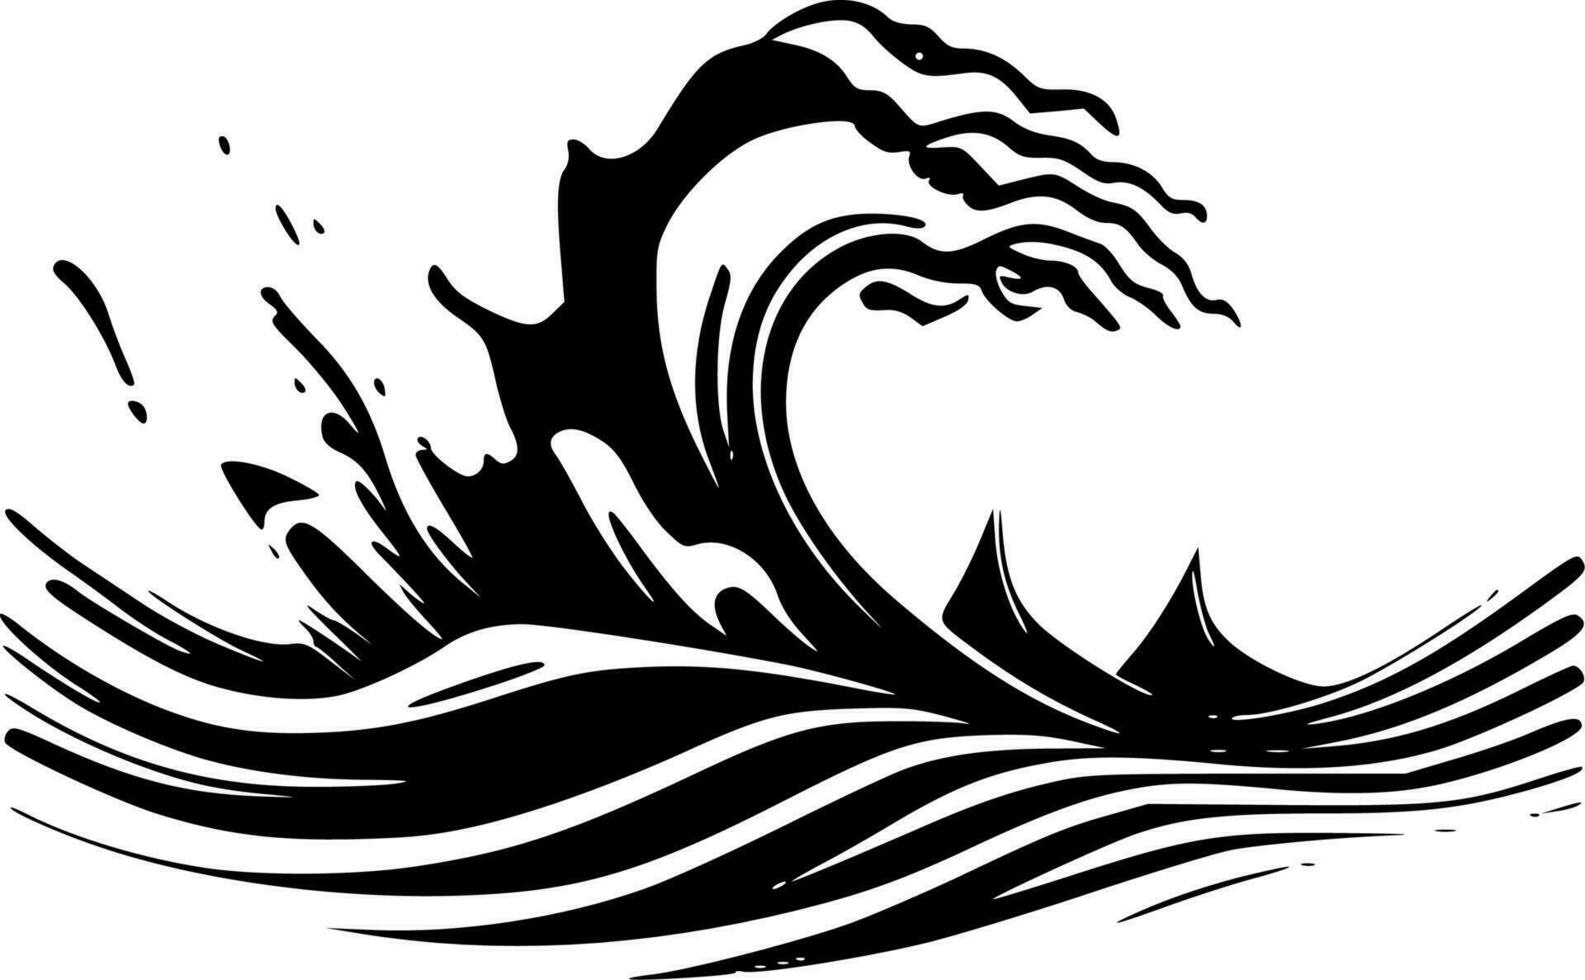 Waves, Minimalist and Simple Silhouette - Vector illustration